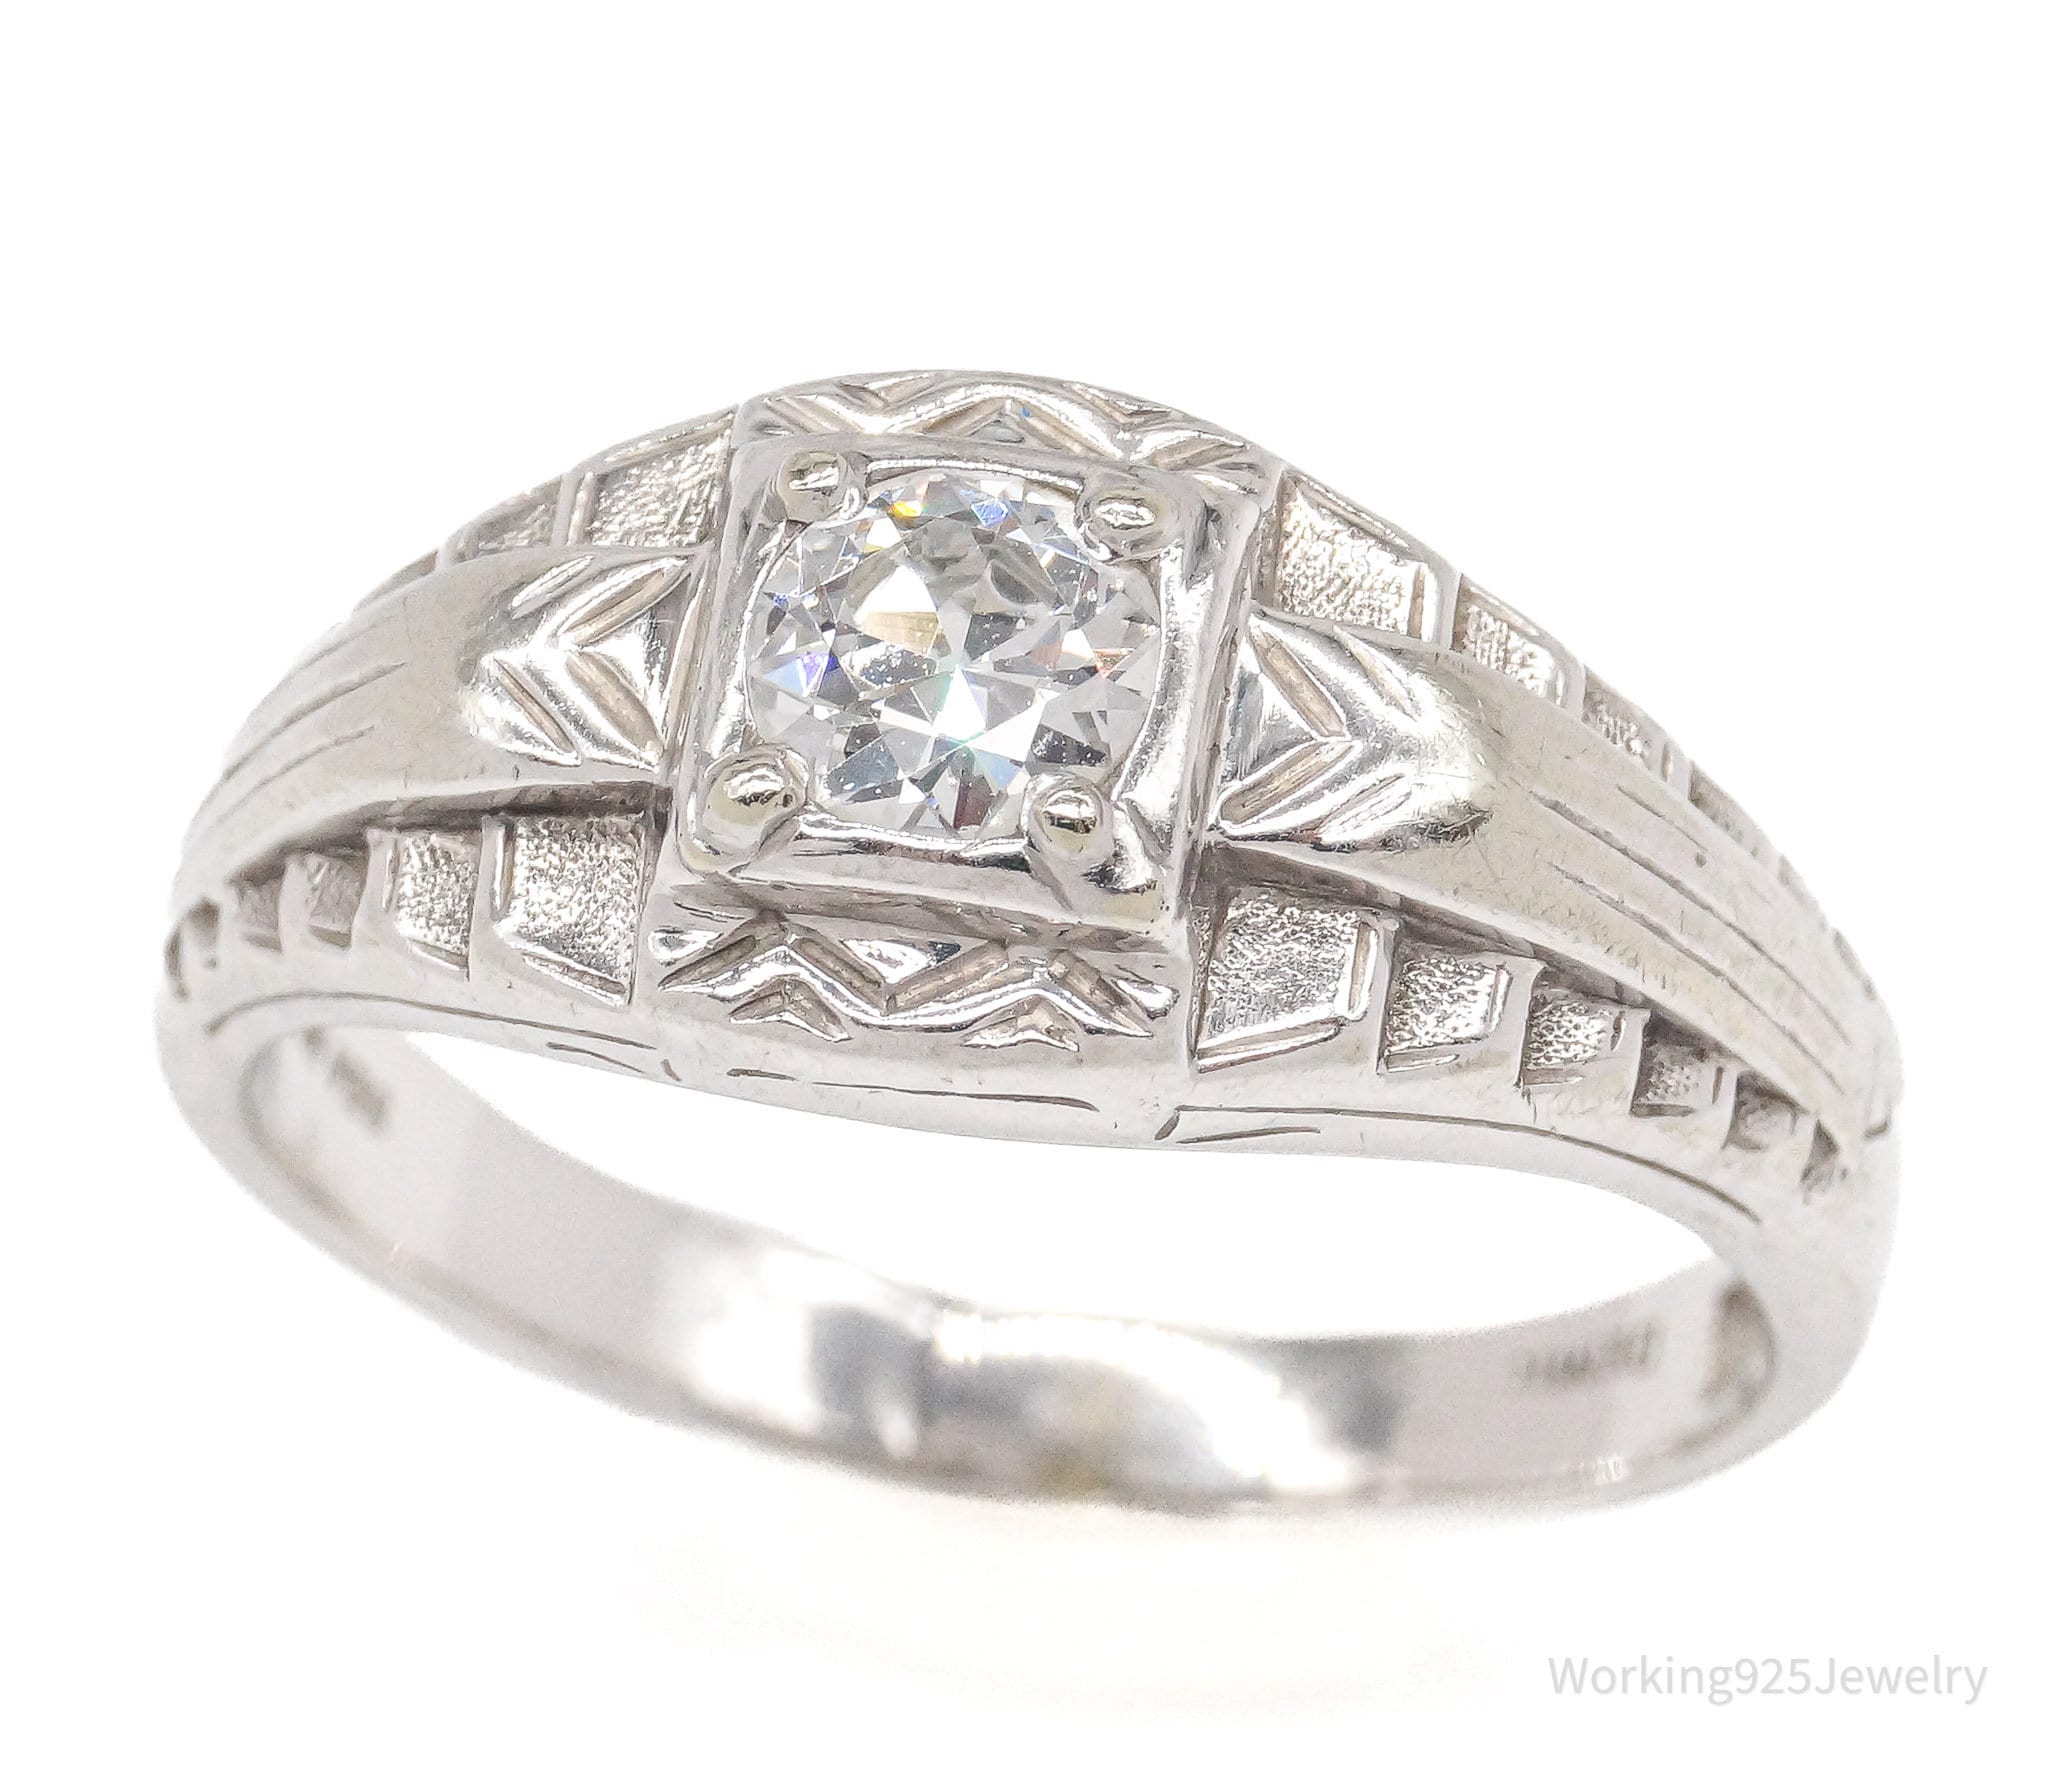 Vintage SeaHawks #32 Diamond 18K White Gold Ring - Size 9.5